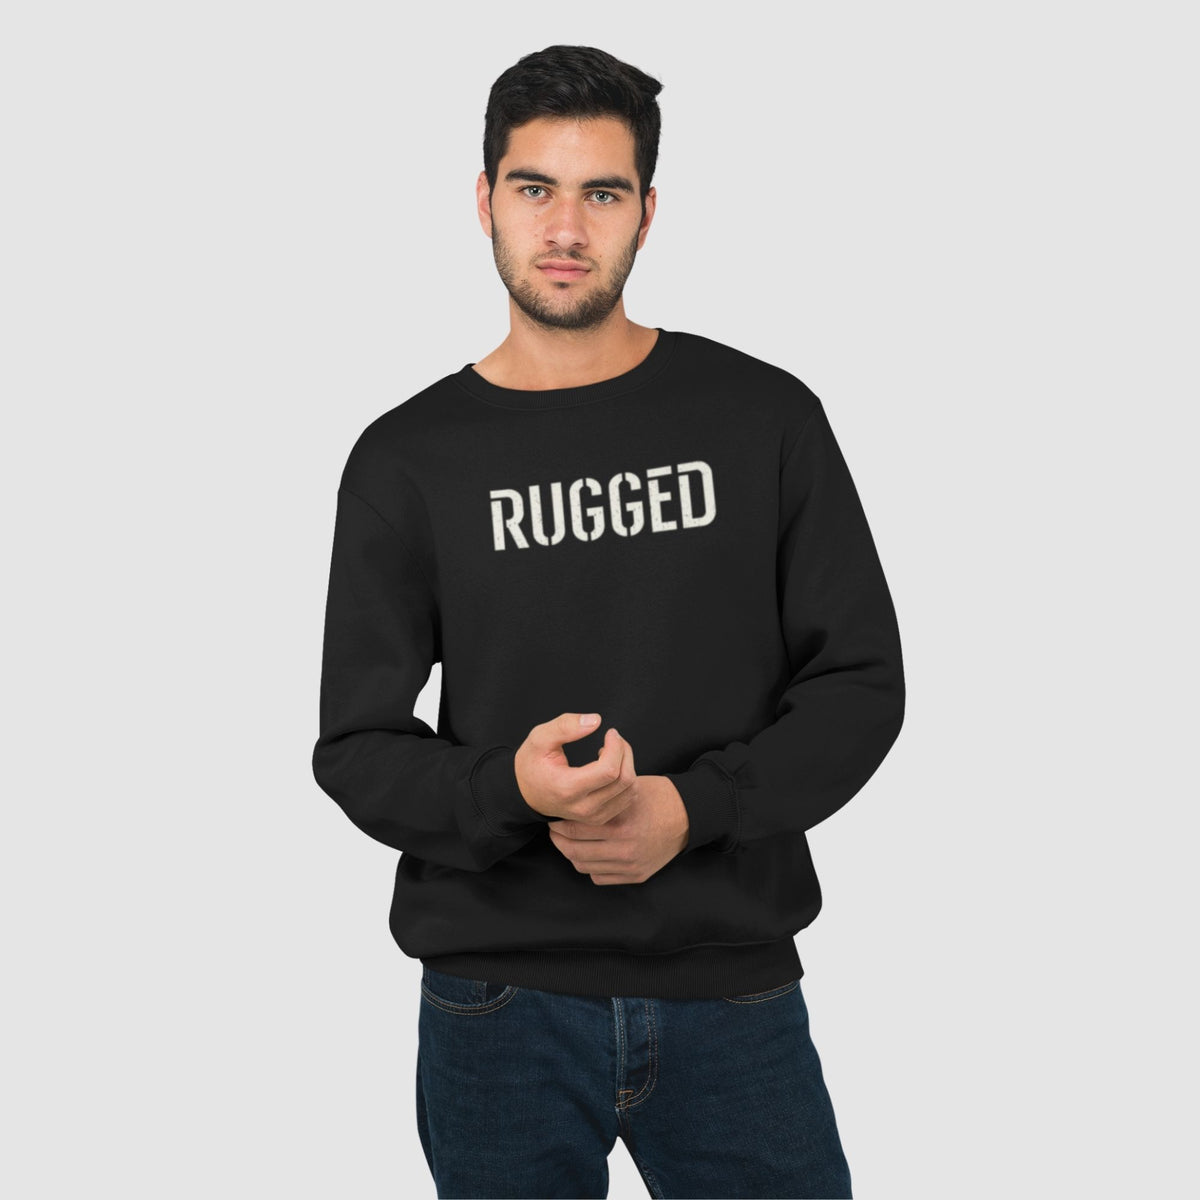 rugged-cotton-printed-unisex-black-men-model-sweatshirt-gogirgit-com